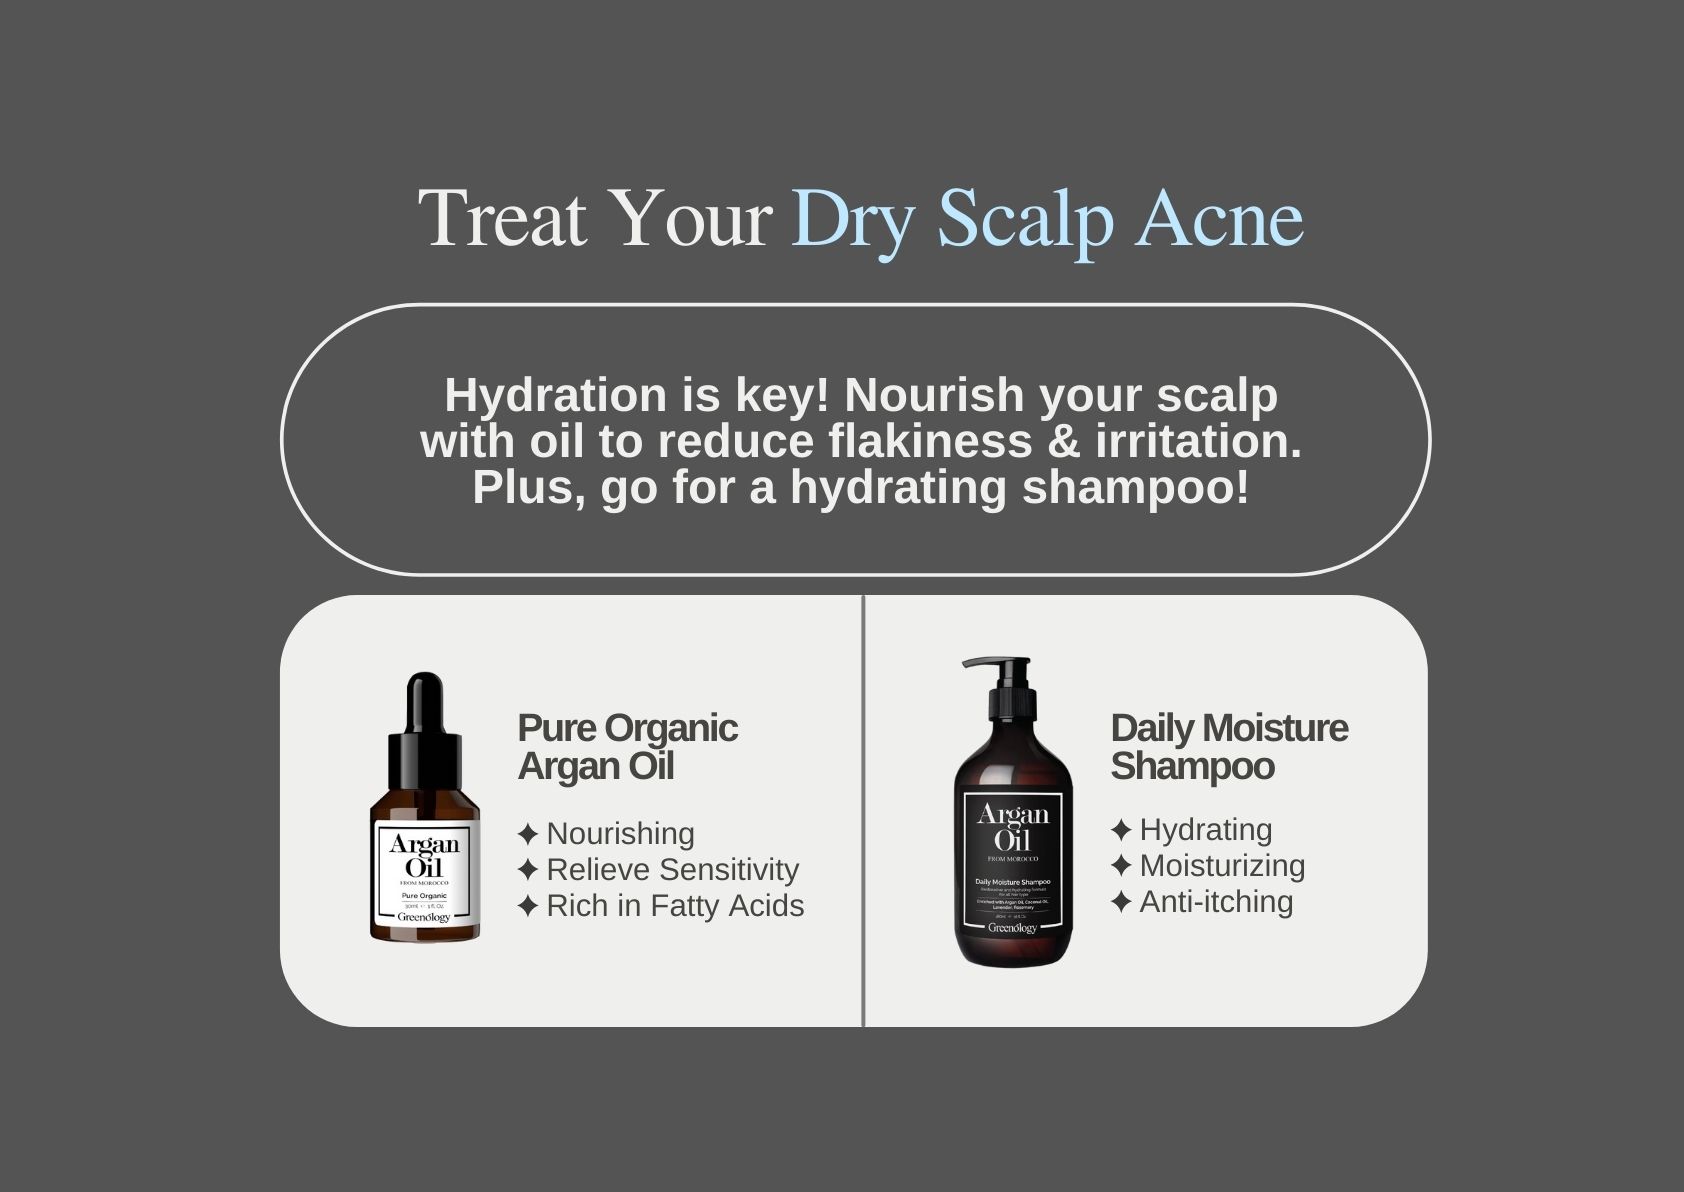 Treat your dry scalp acne